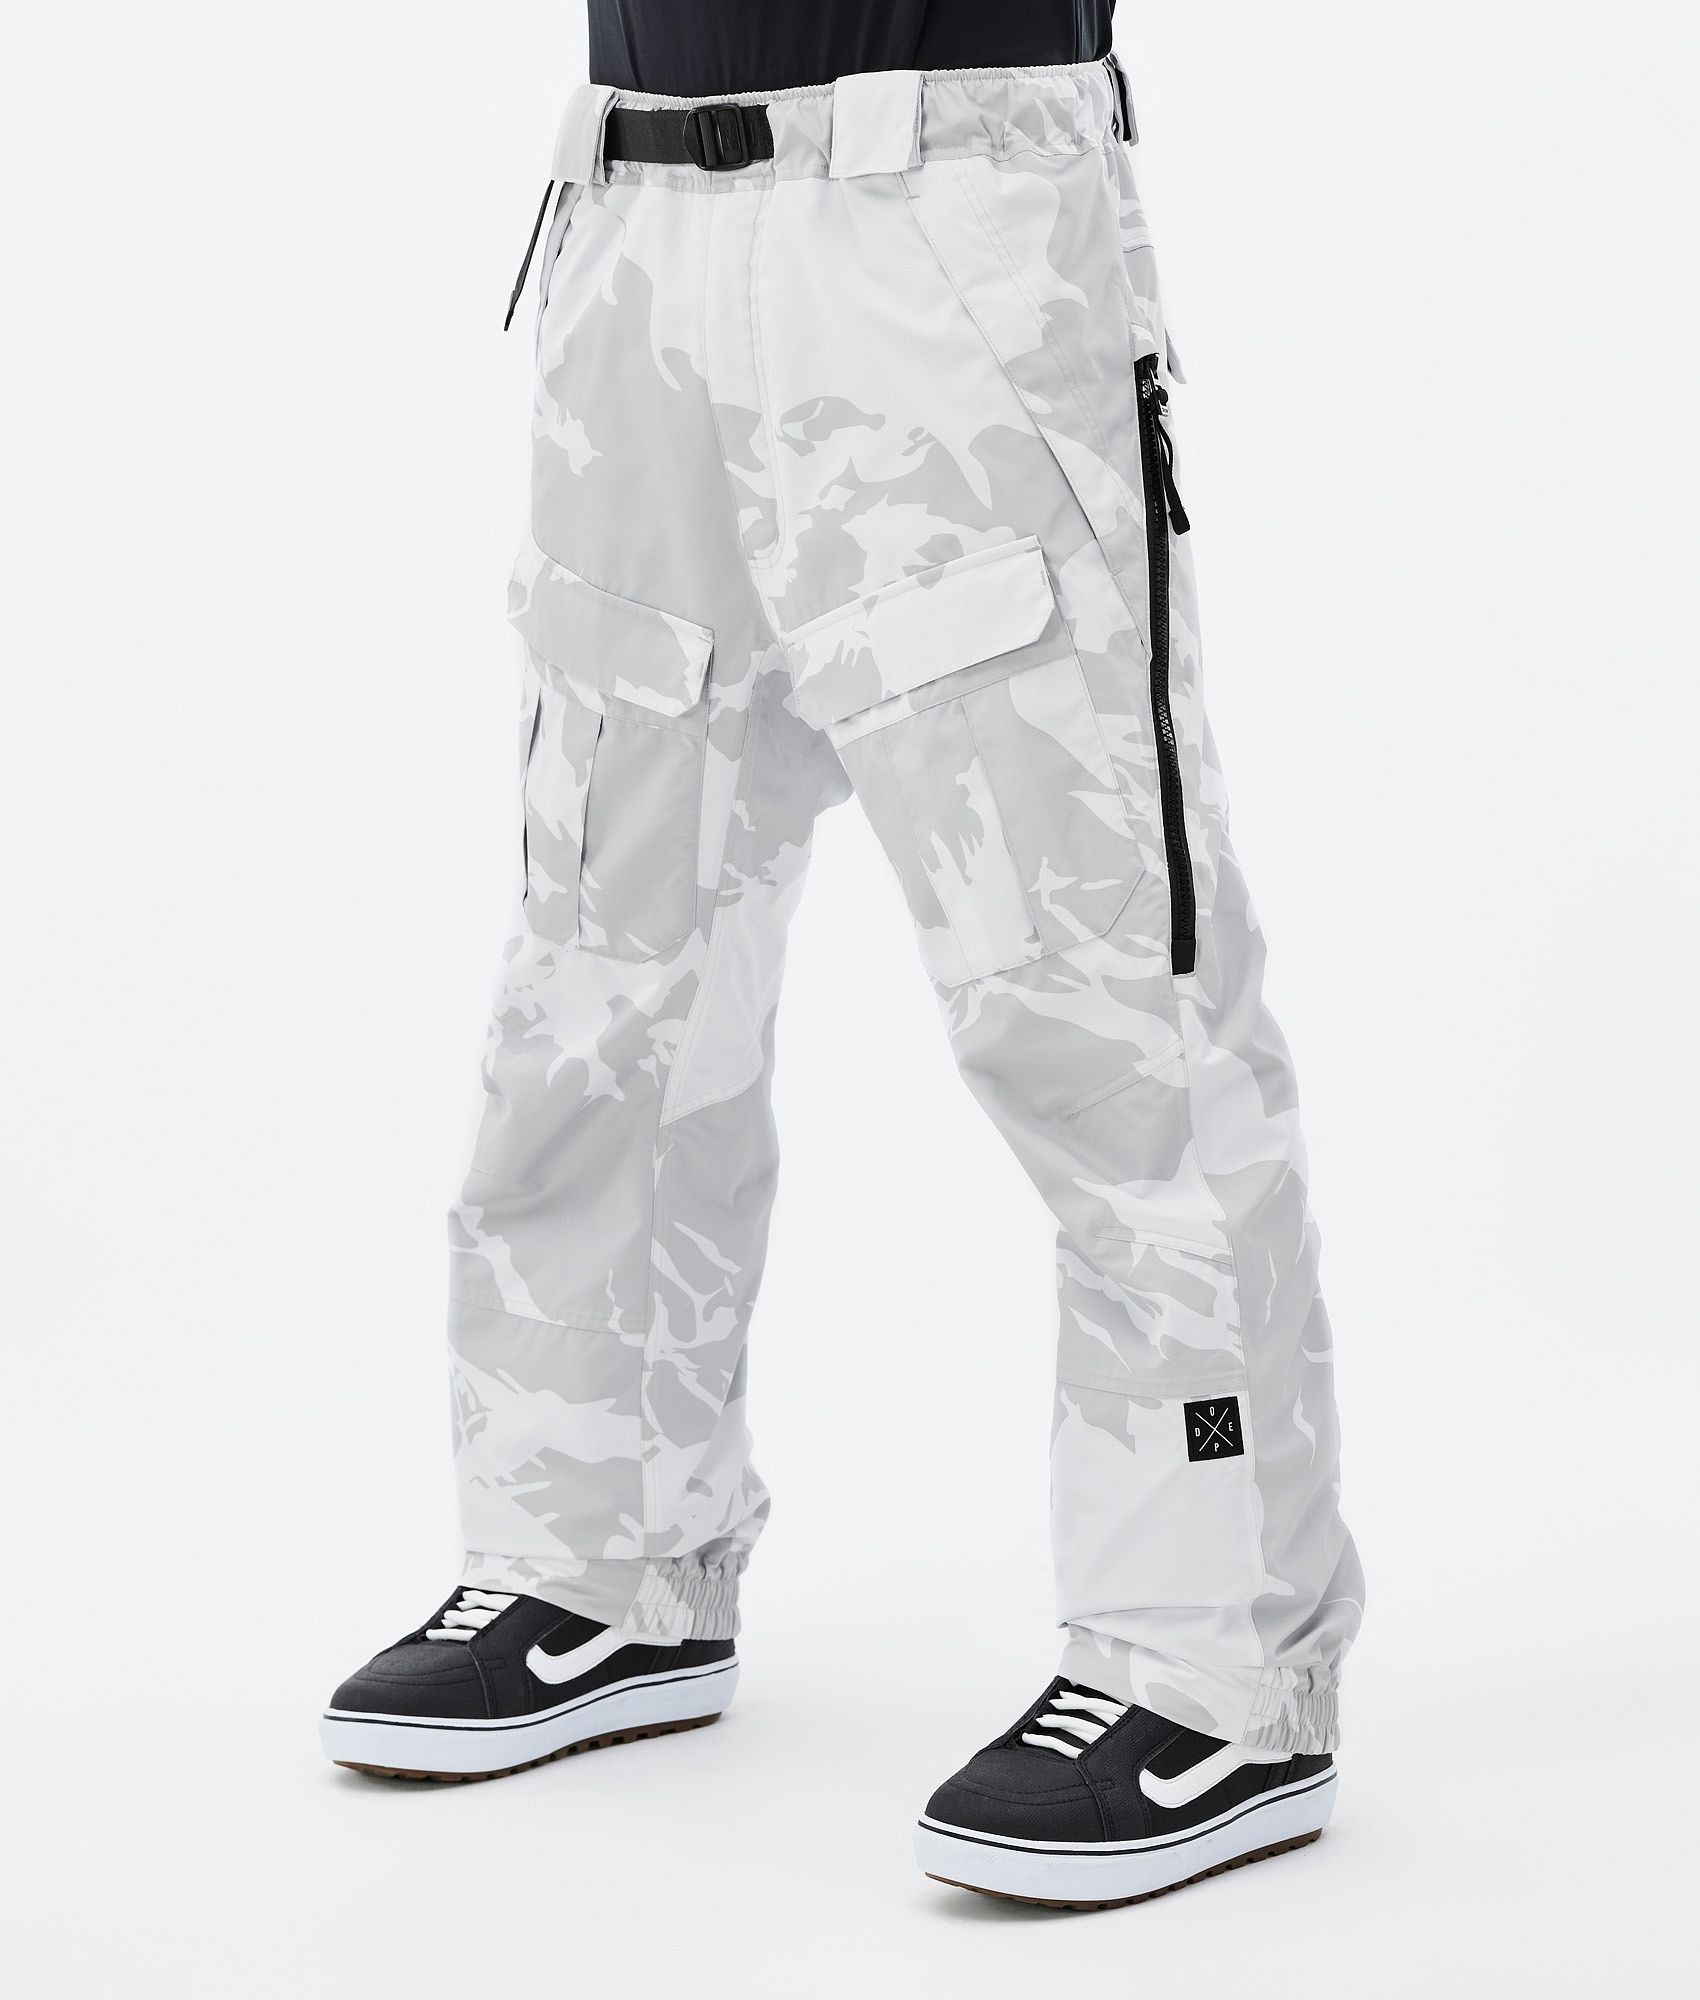 NWT Men's Regal Wear Black White Camouflage Camo Cargo Pants ALL  SIZES/LENGTHS | eBay